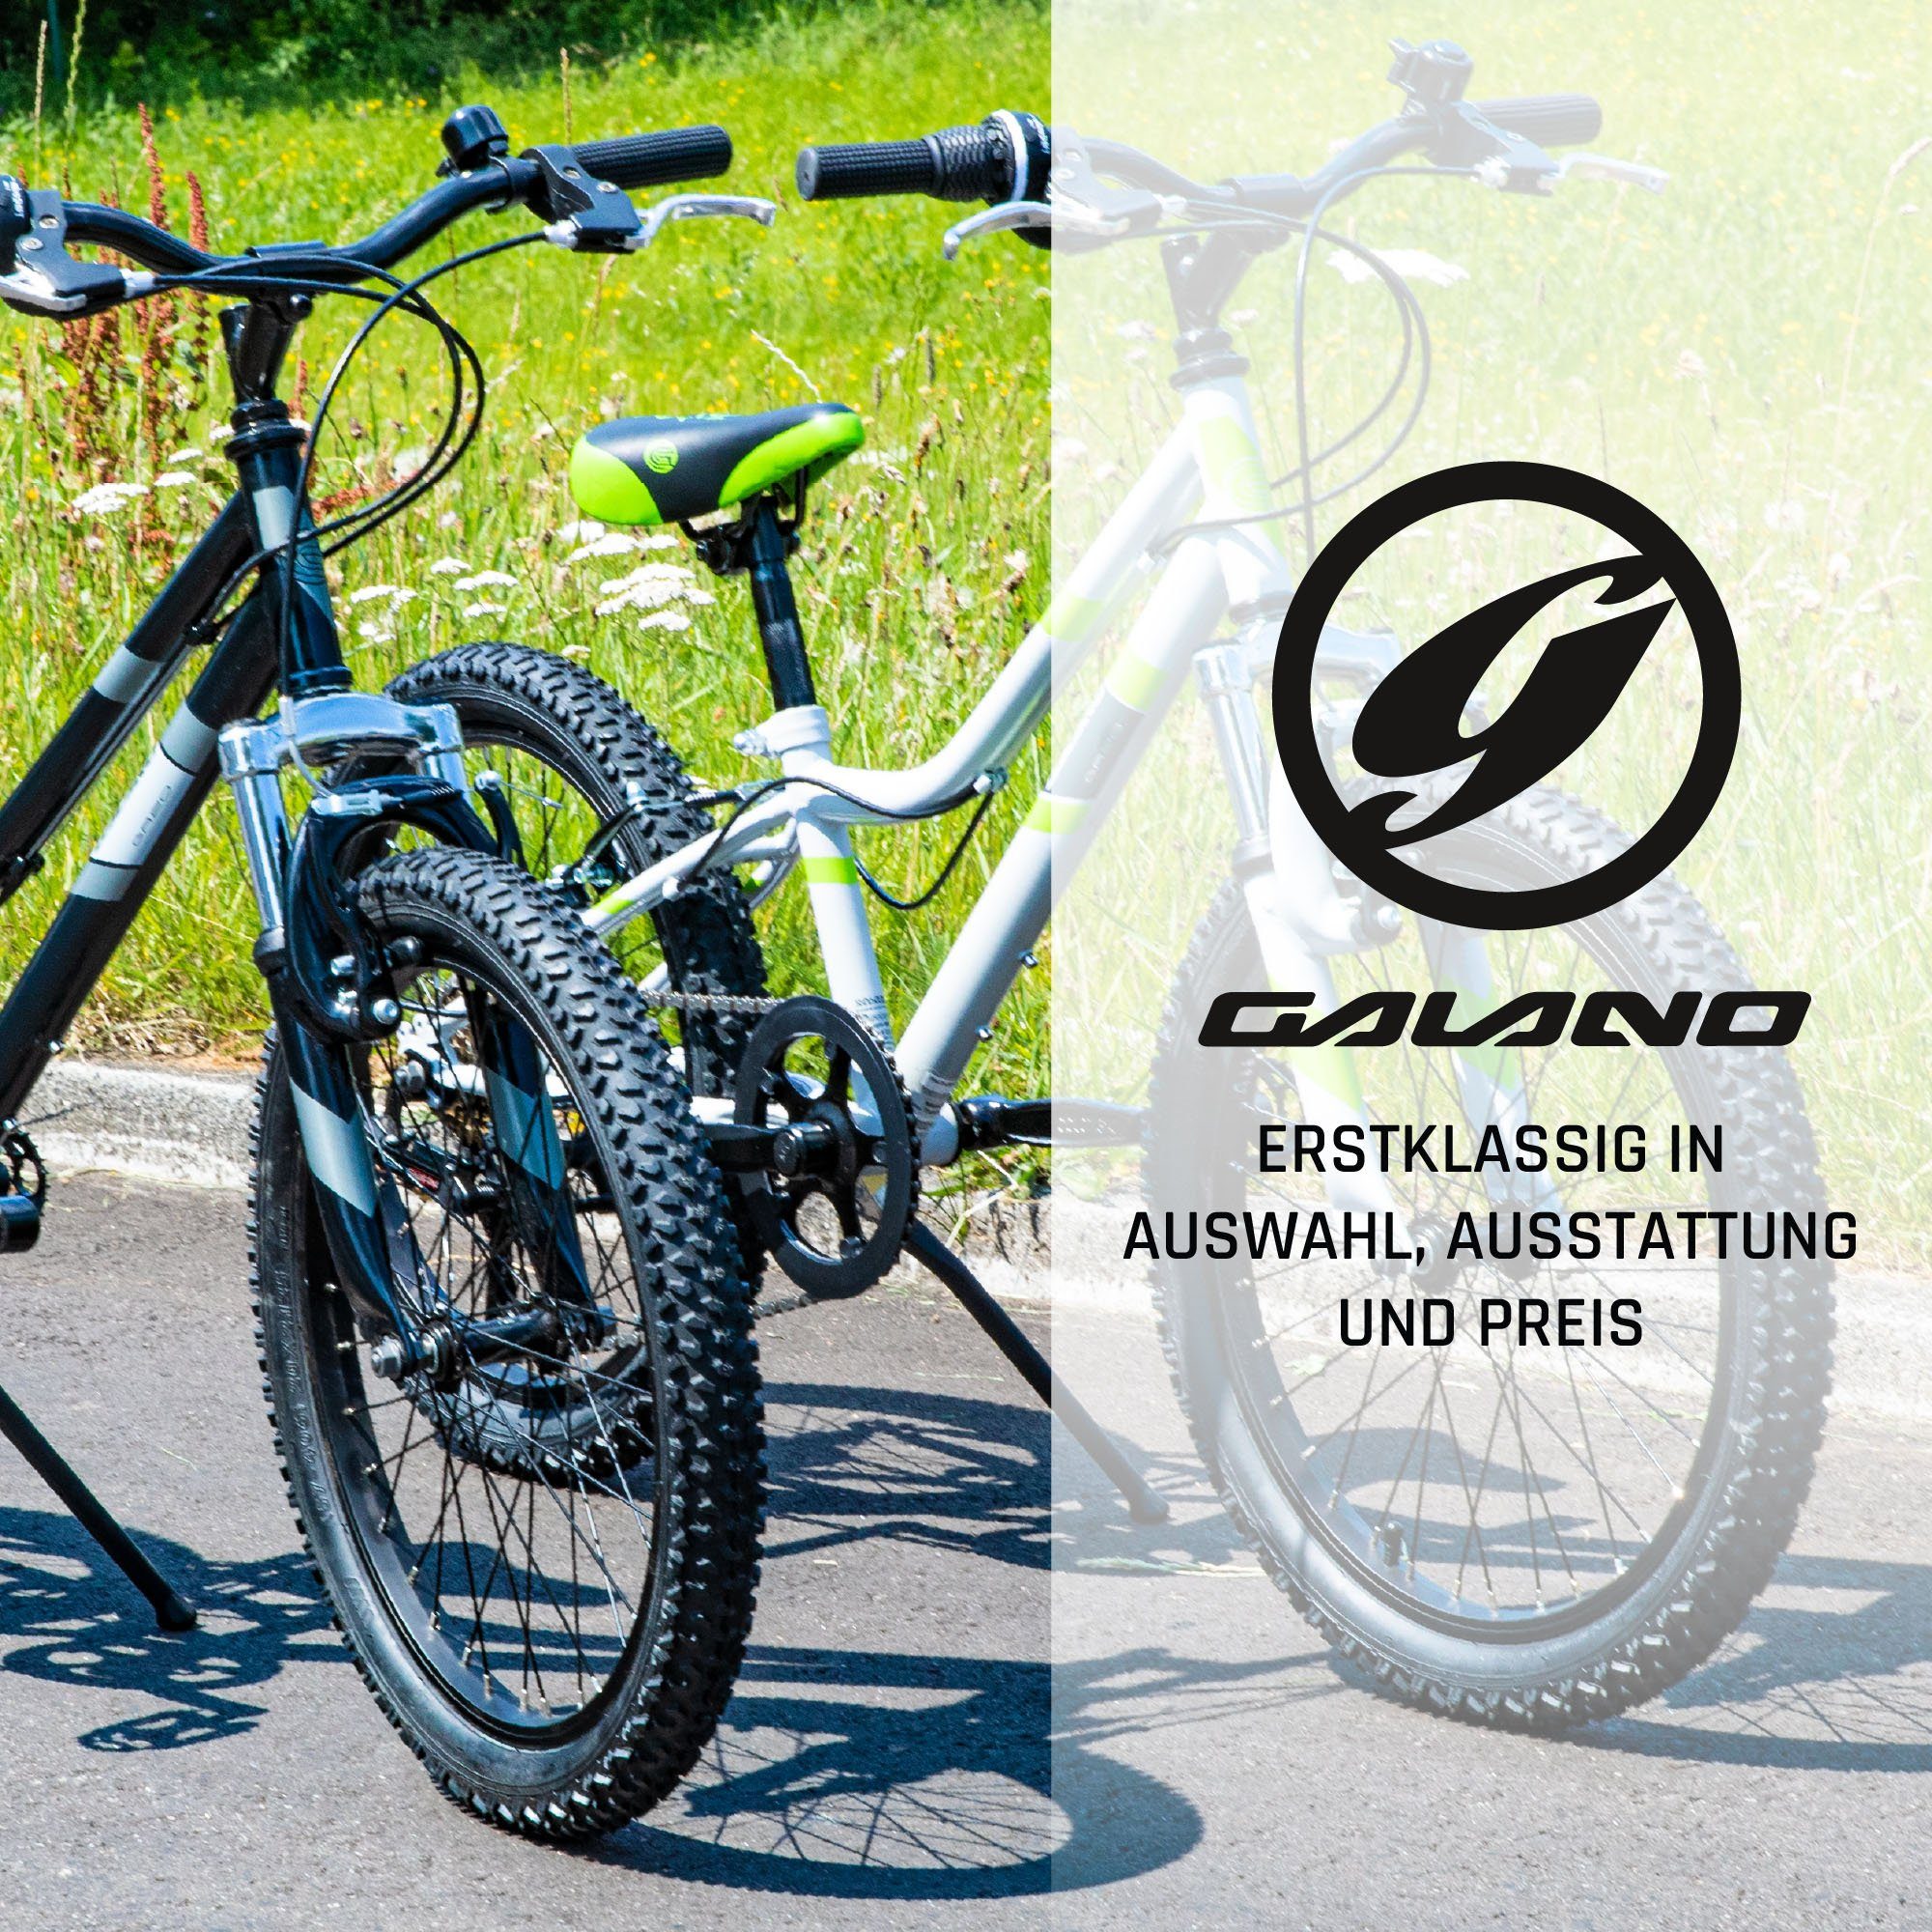 Galano Mountainbike GA20, ab 7 - Kinderfahrrad Zoll Gang, 135 120 Kettenschaltung, blau Fahrrad cm Jungen 5 Mädchen Jahre 20